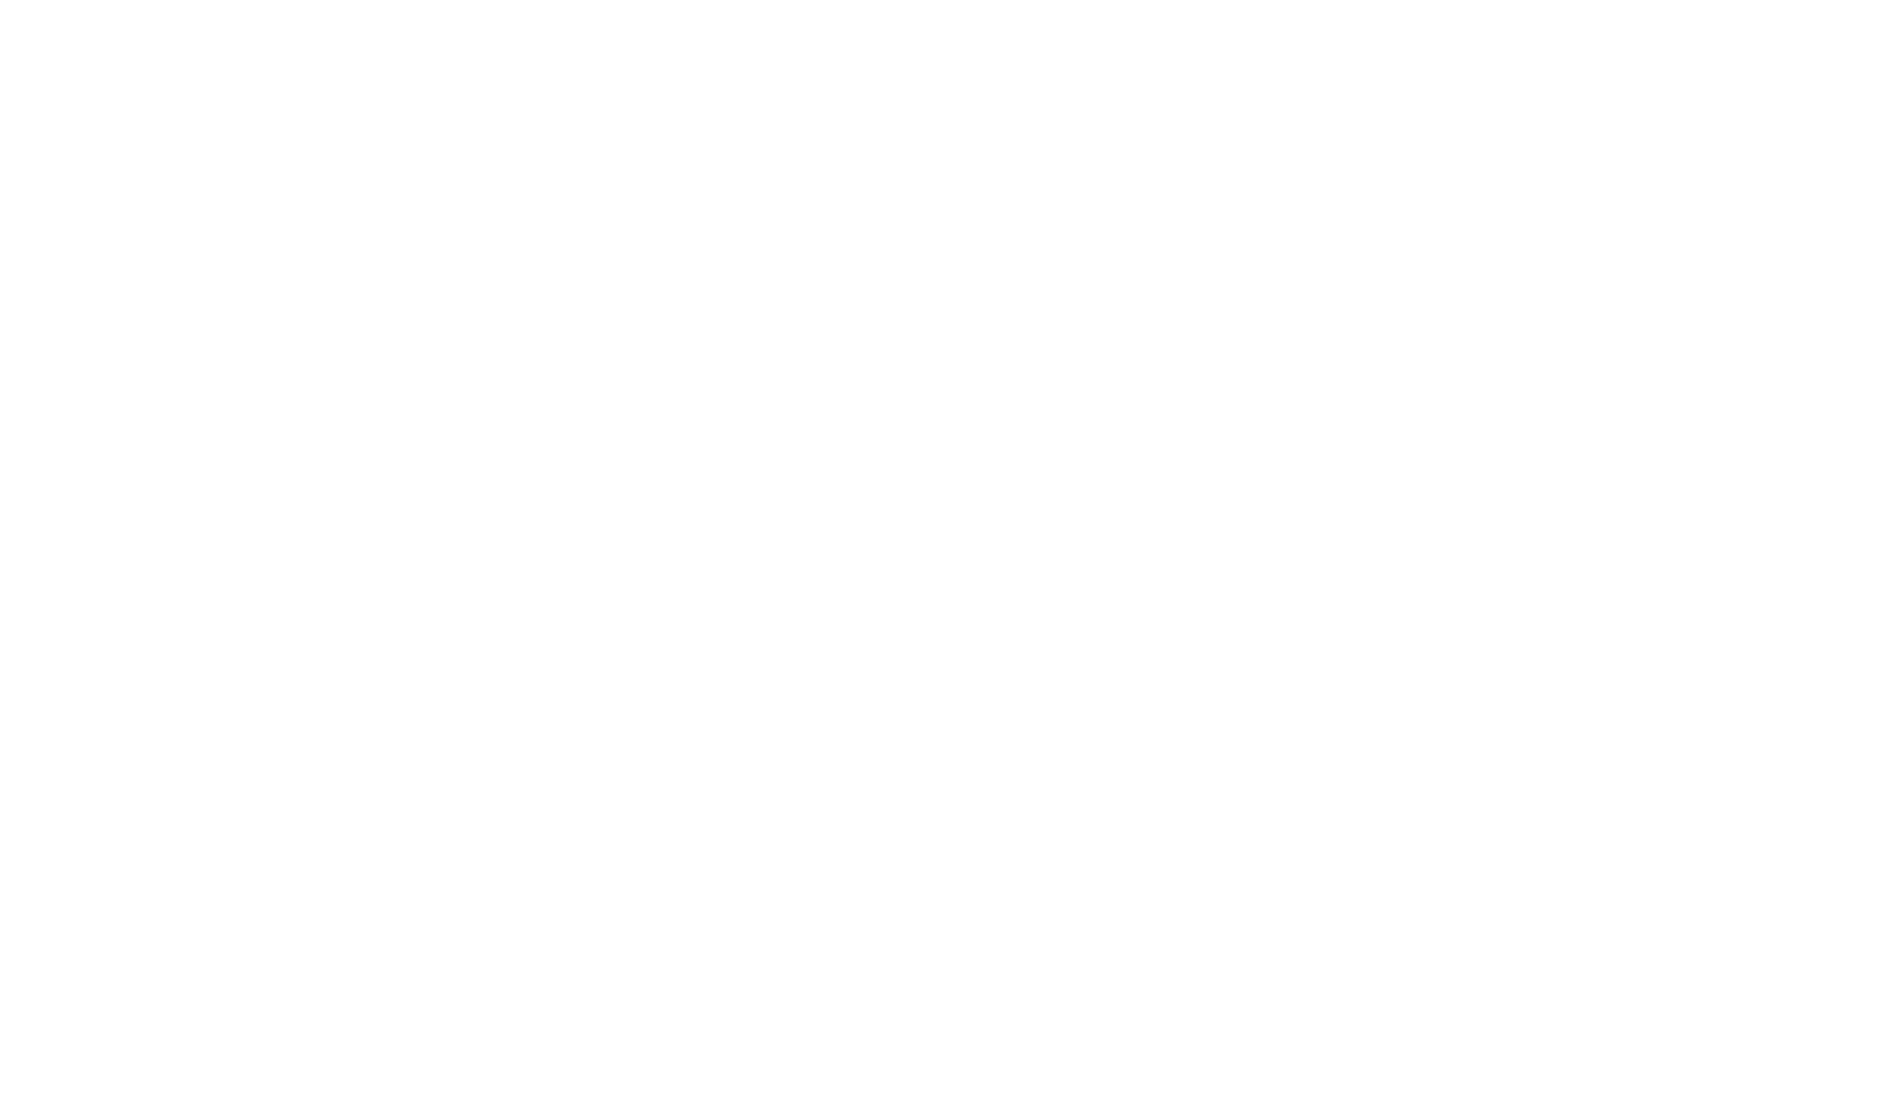 Les fabricants - logo client Best Western